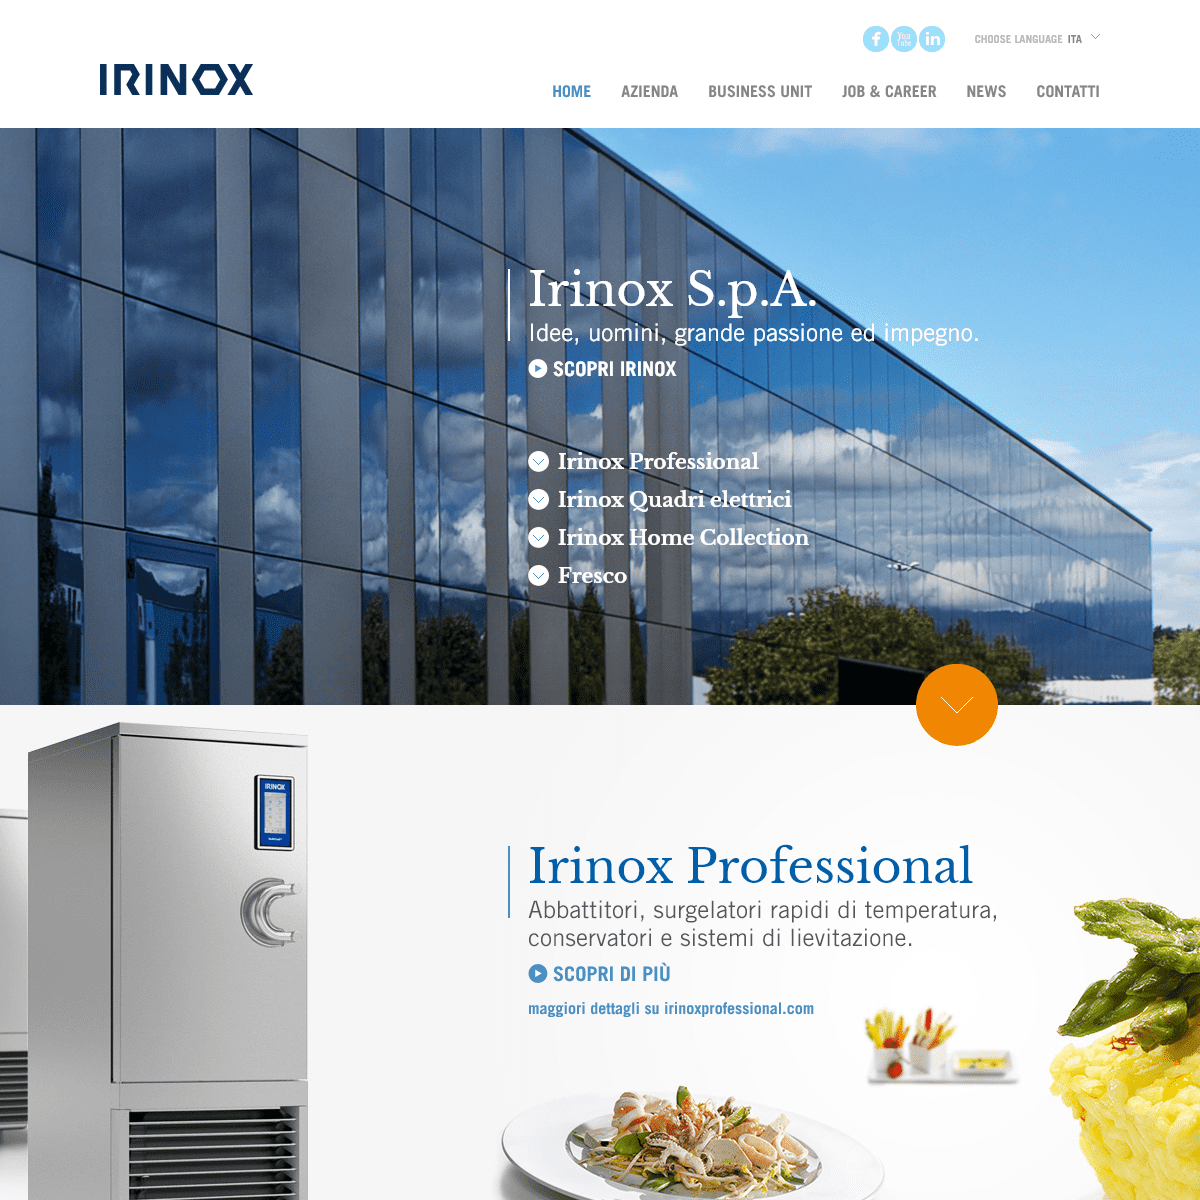 A complete backup of irinox.com